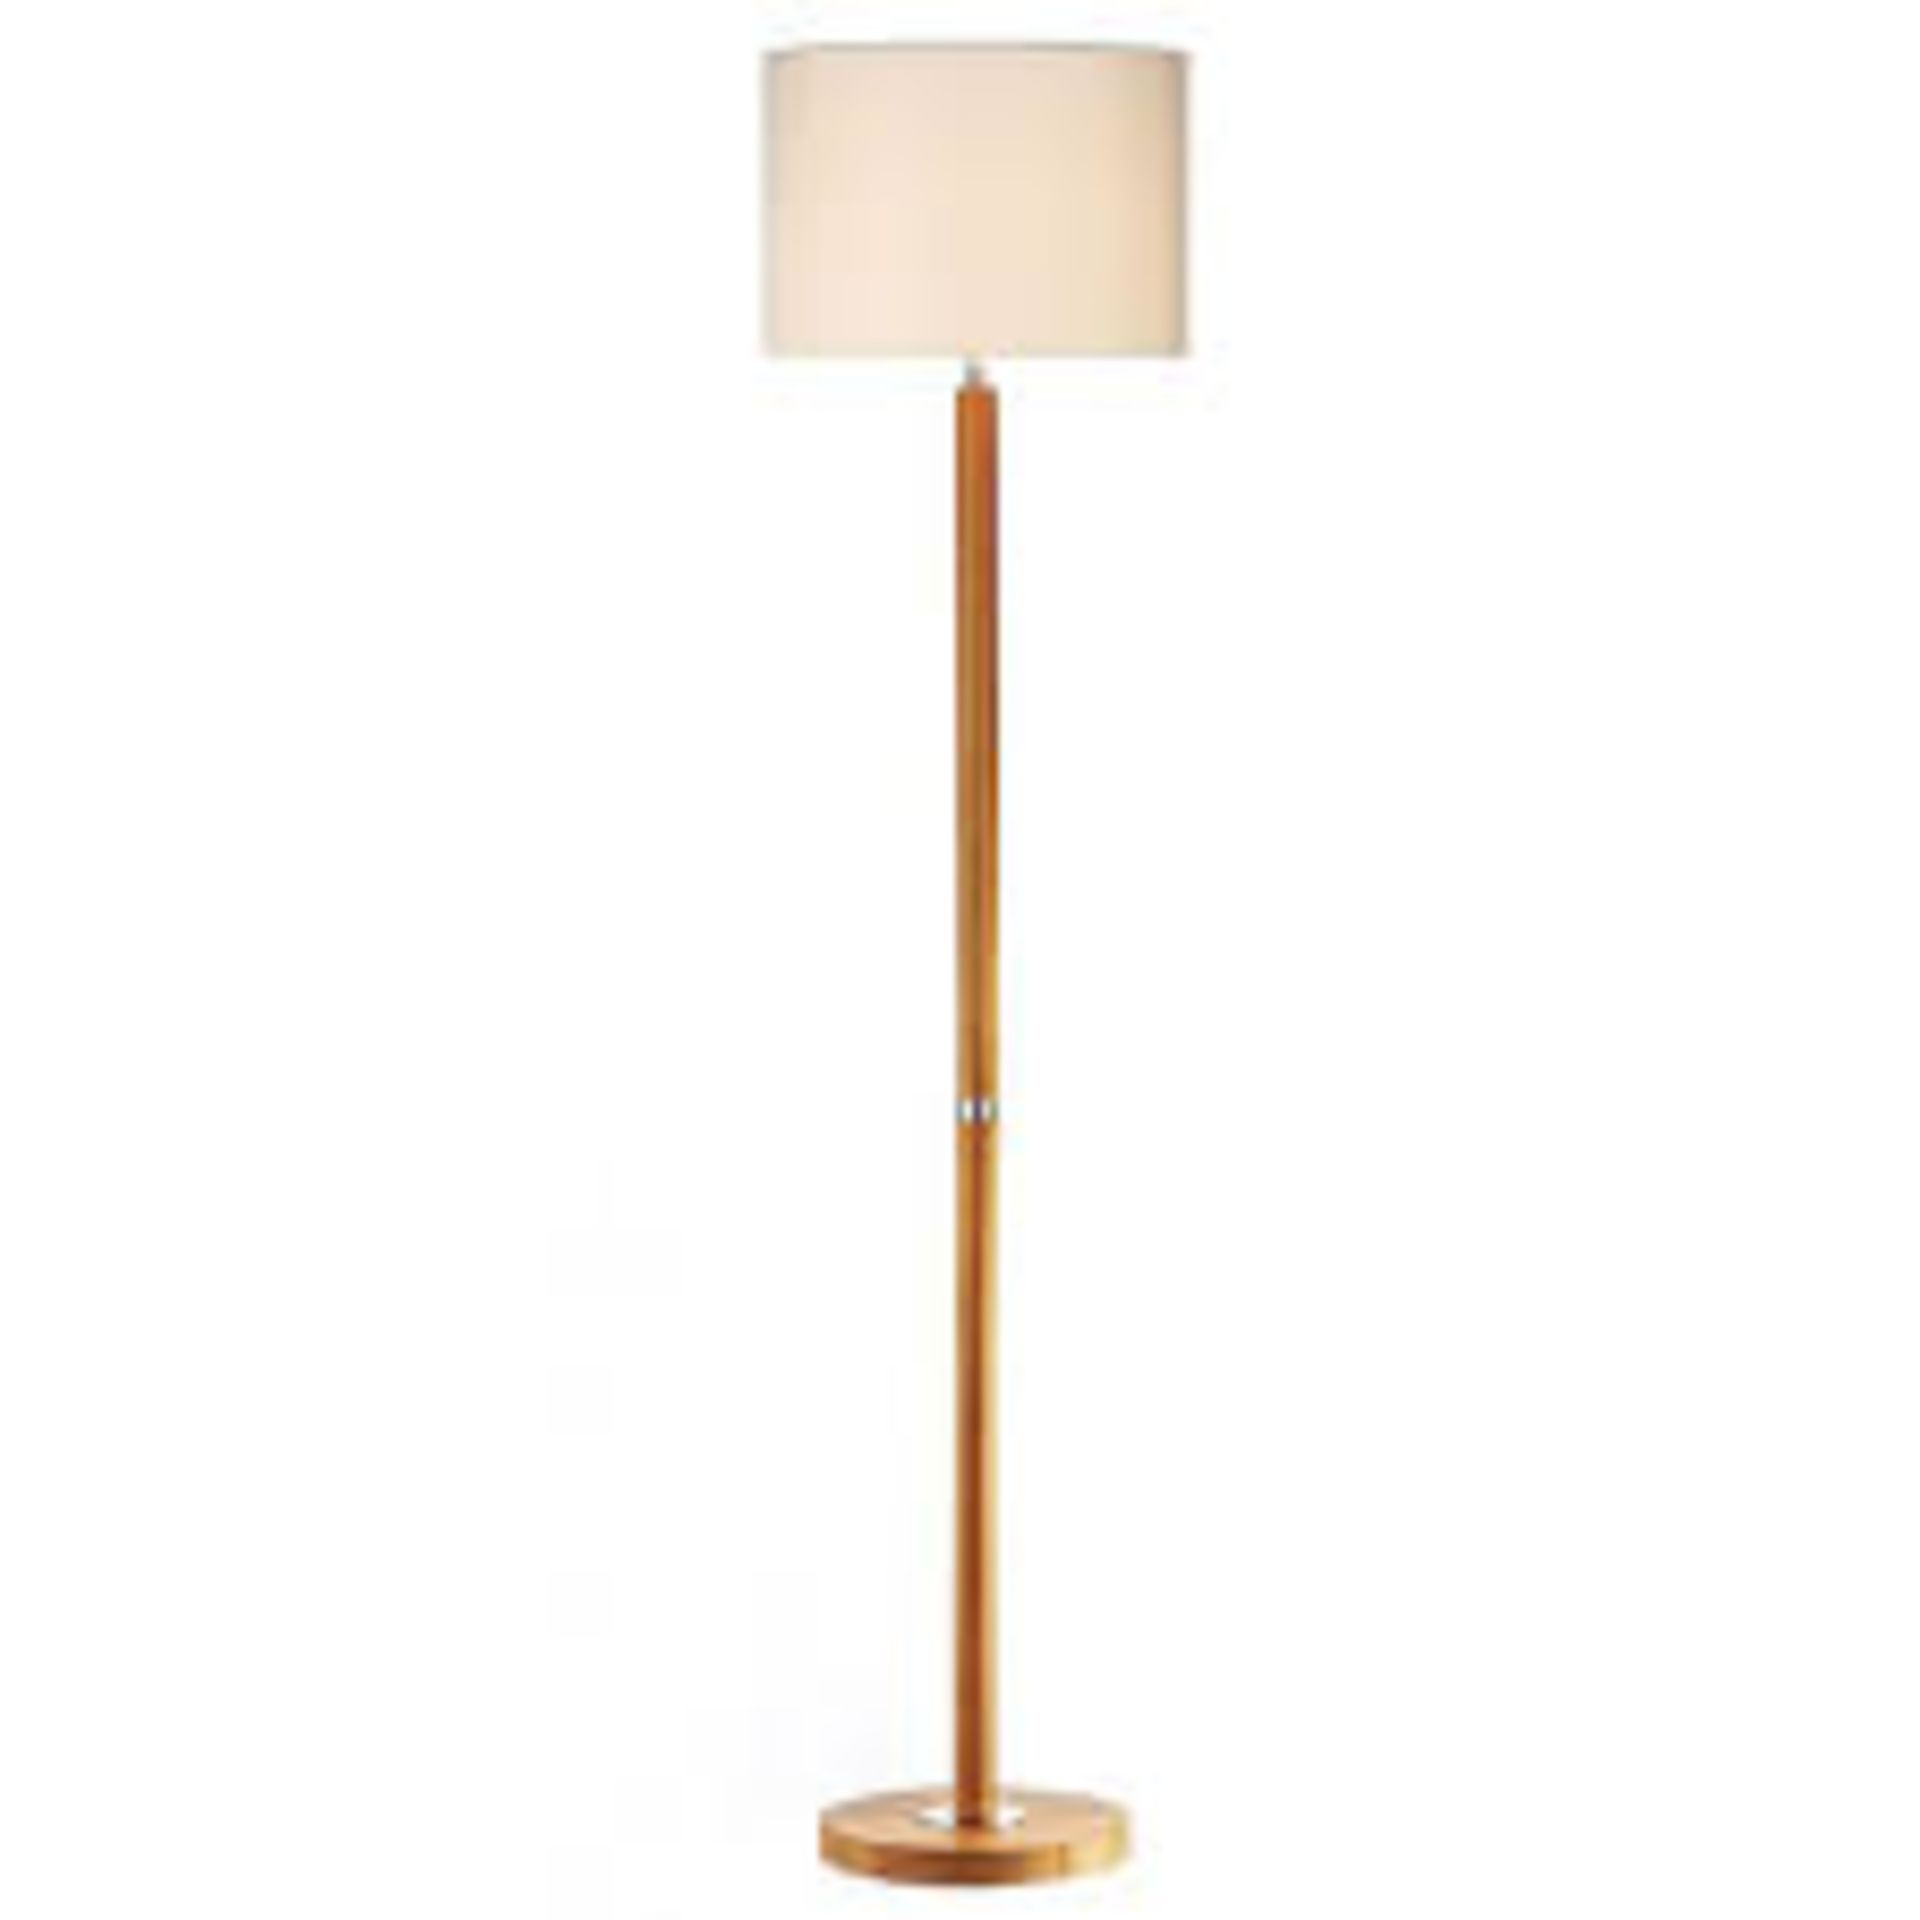 Boxed Dark Lighting Avenue 1 Light Floor Standing Lamp RRP £100 (14794) (Appraisals Available)